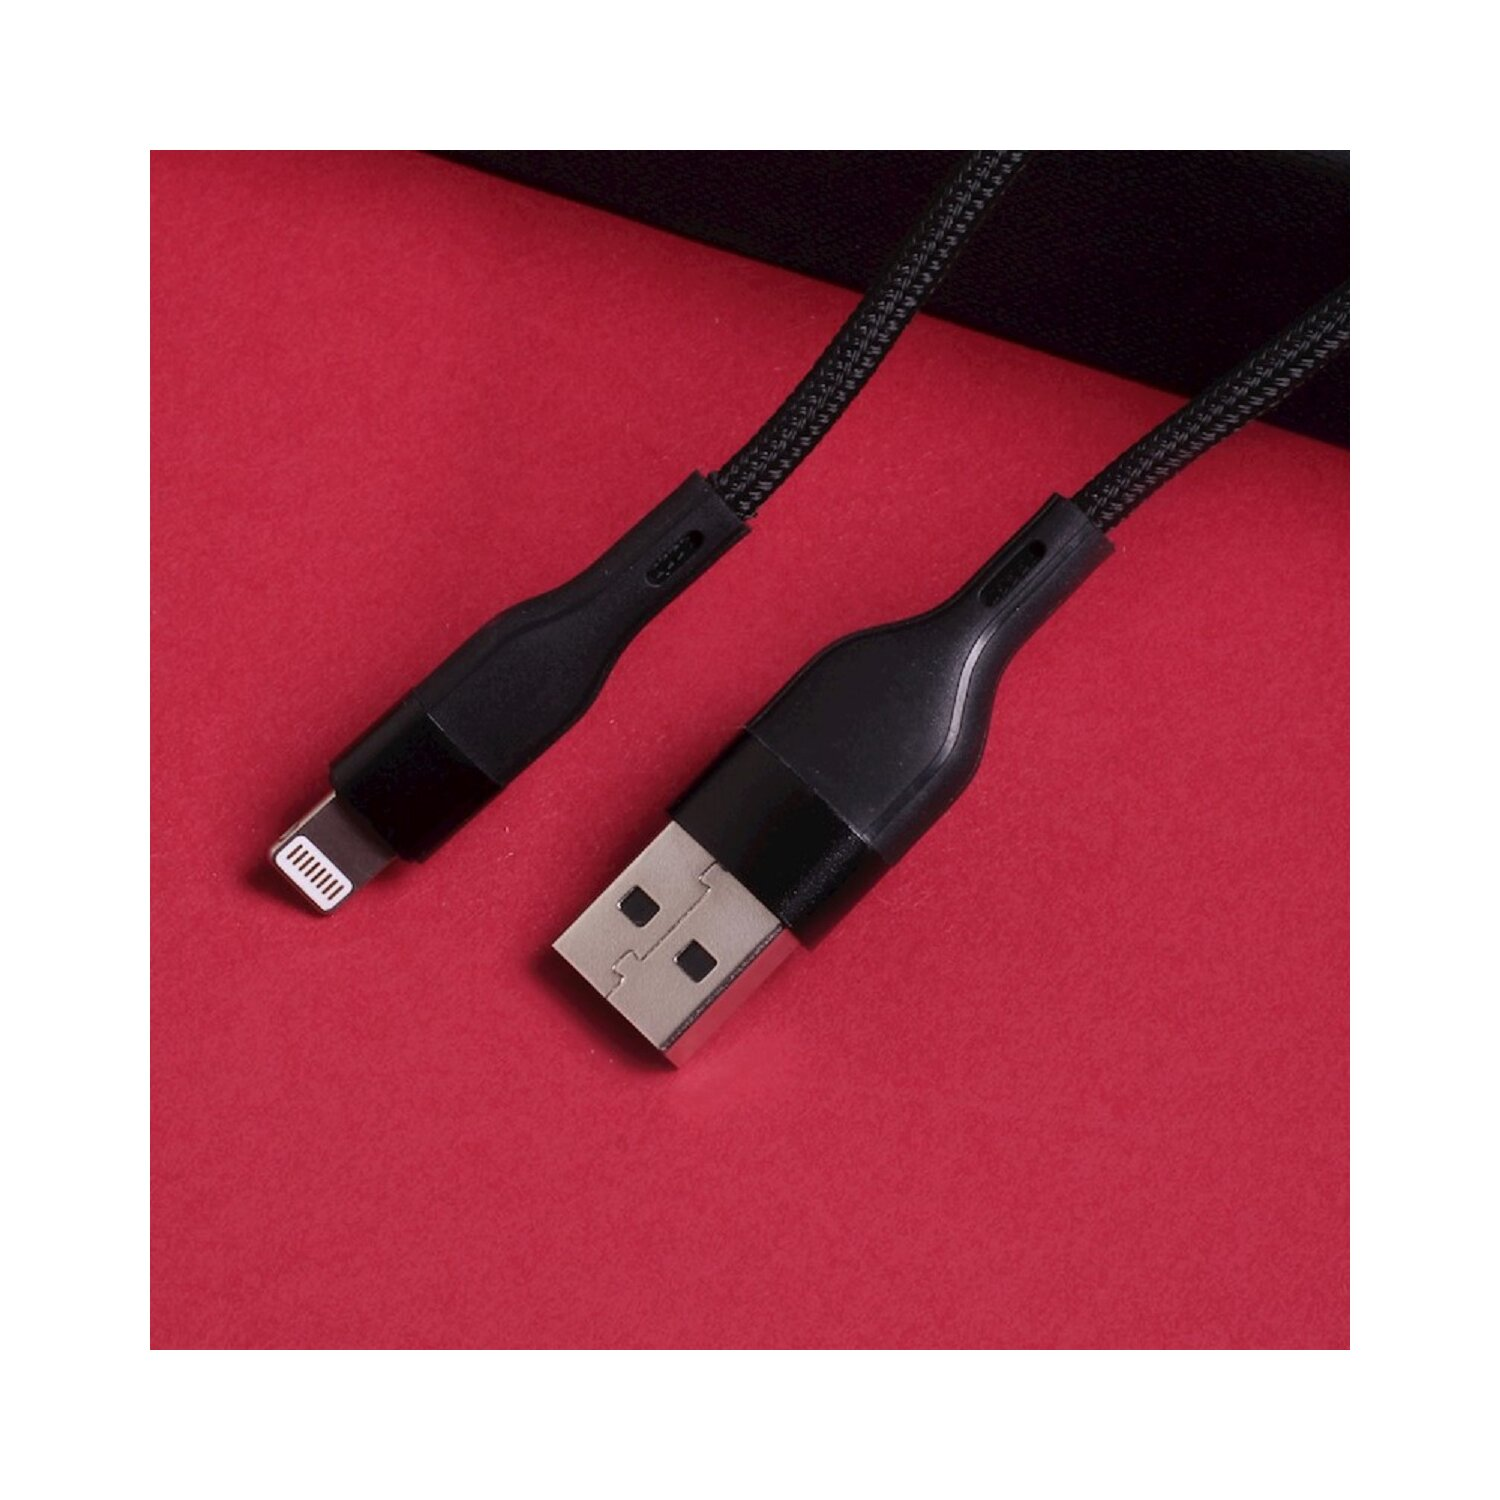 MAXLIFE MXUC-07 Kabel m, iPhone1,0 Schwarz Ladekabel, - USB